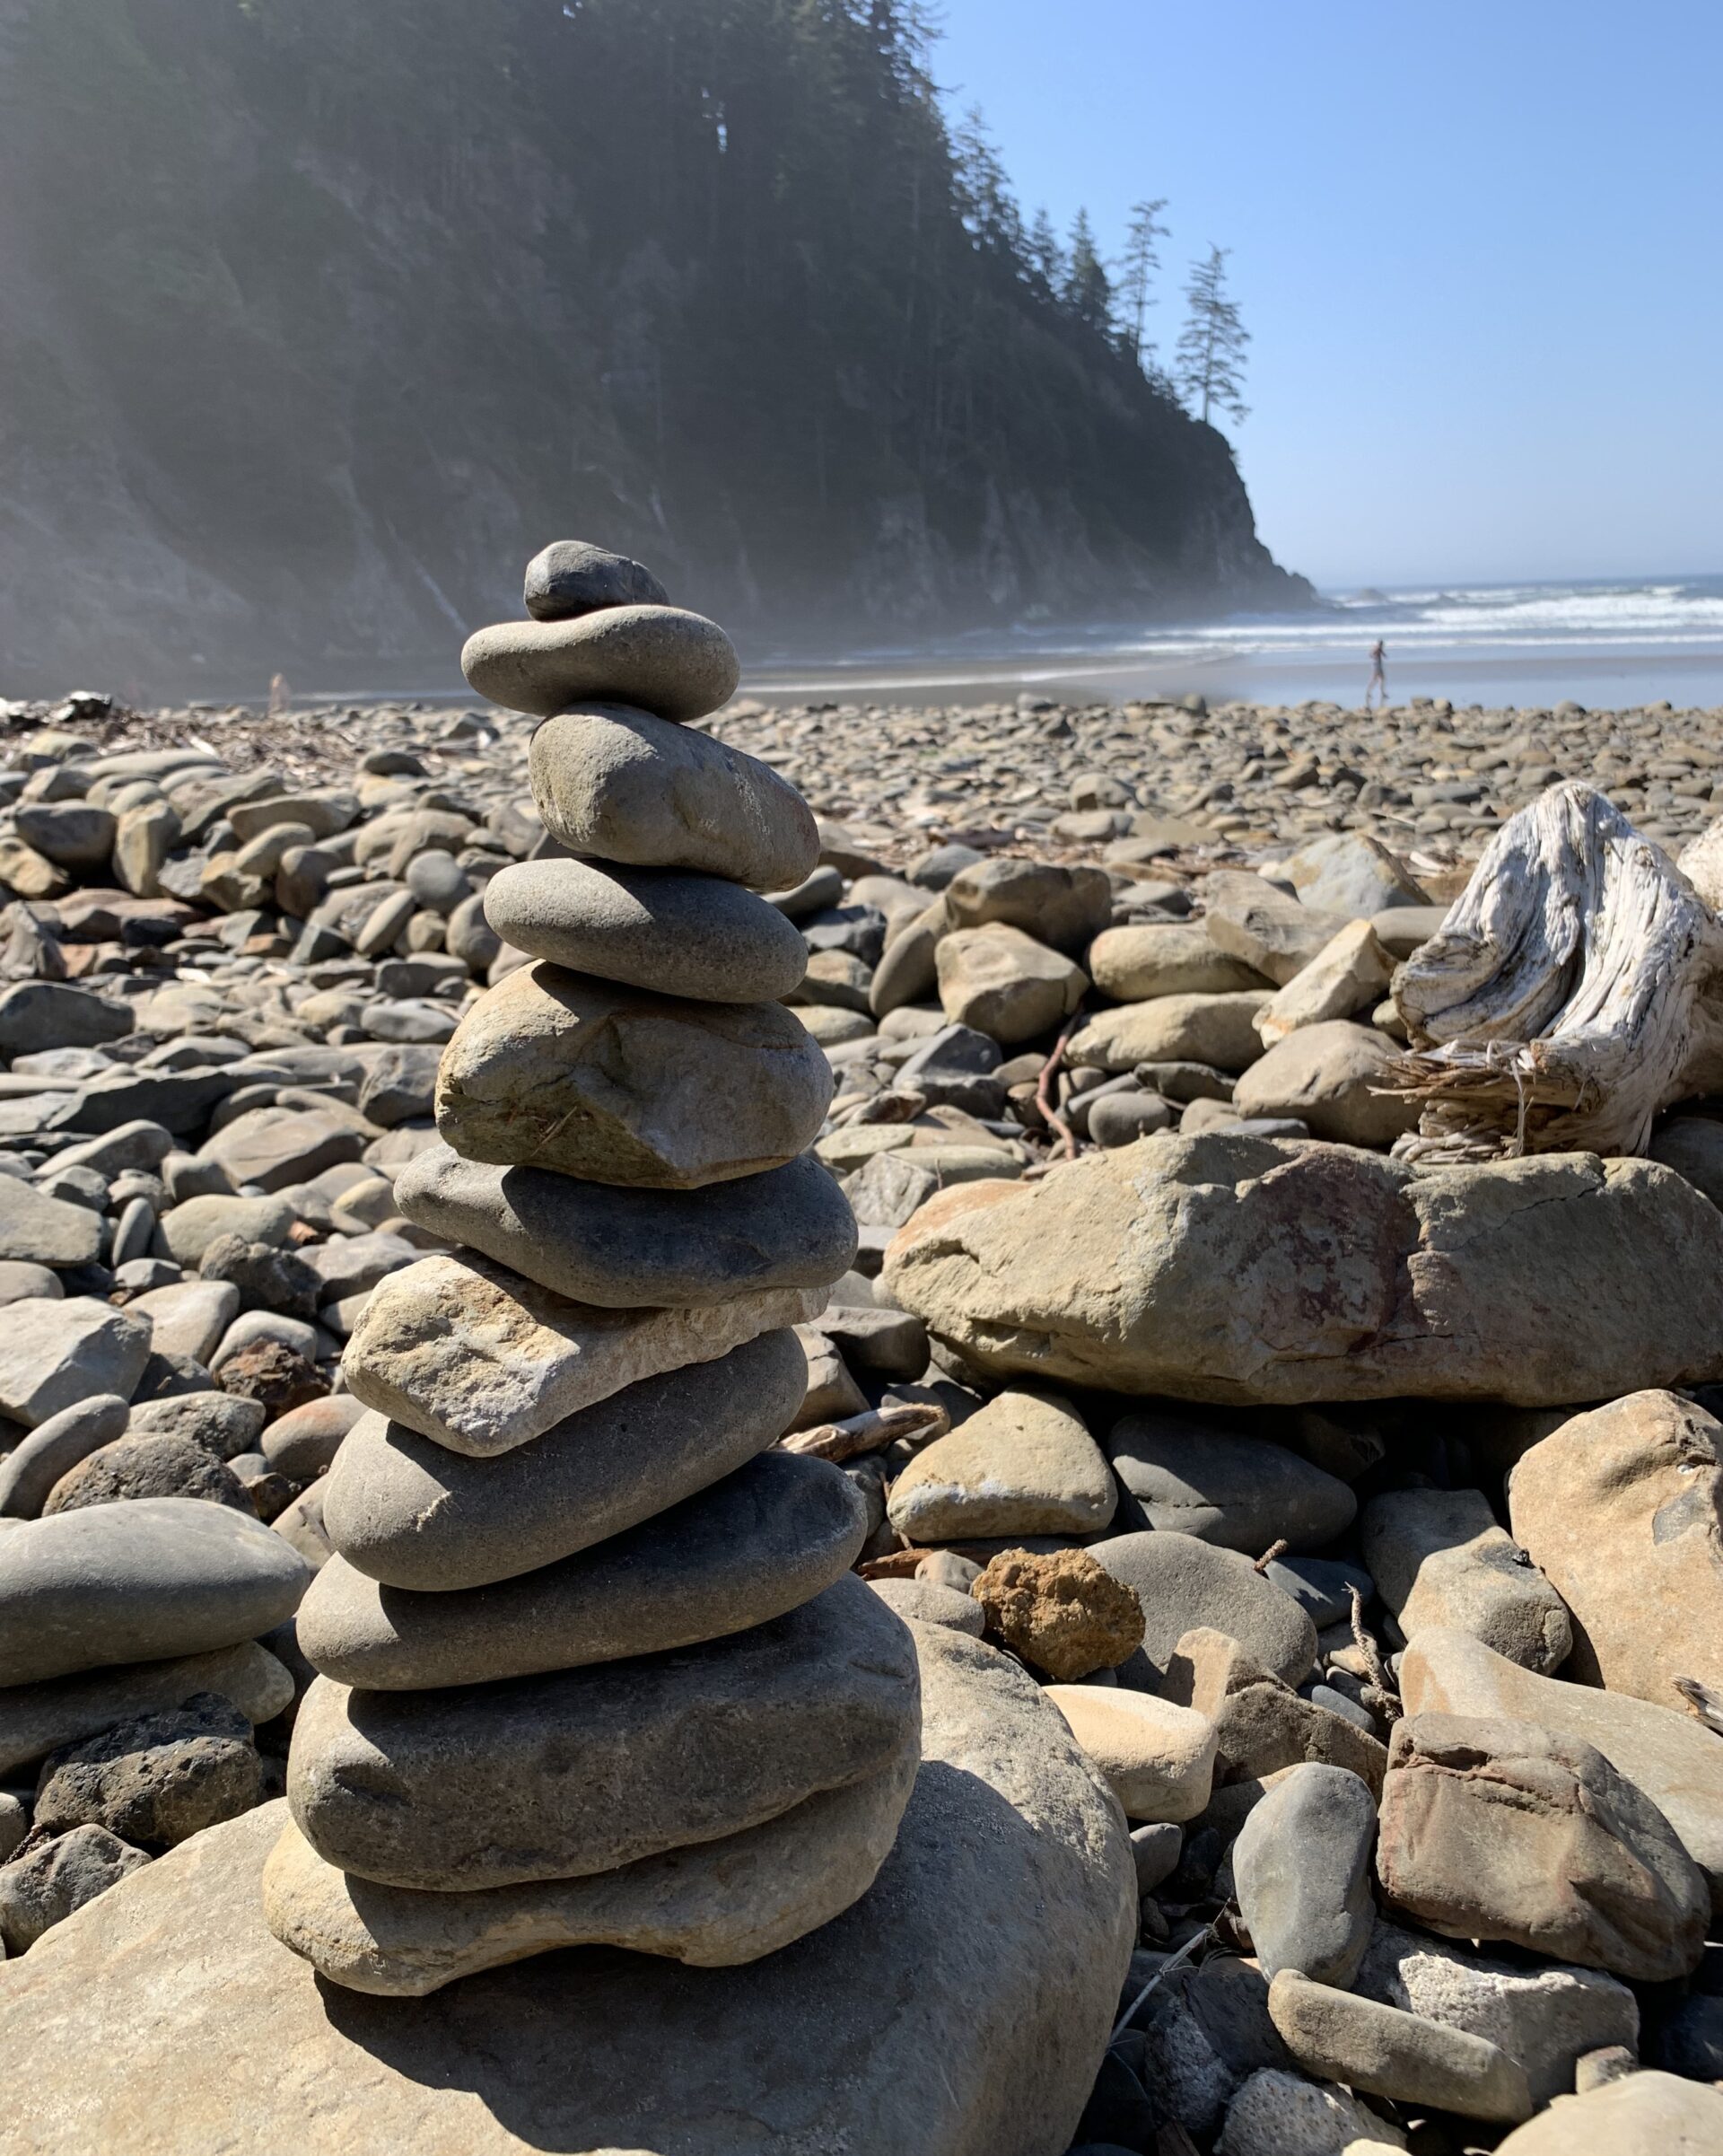 Zen rocks by the water; Meet IFS therapist Seth Auman